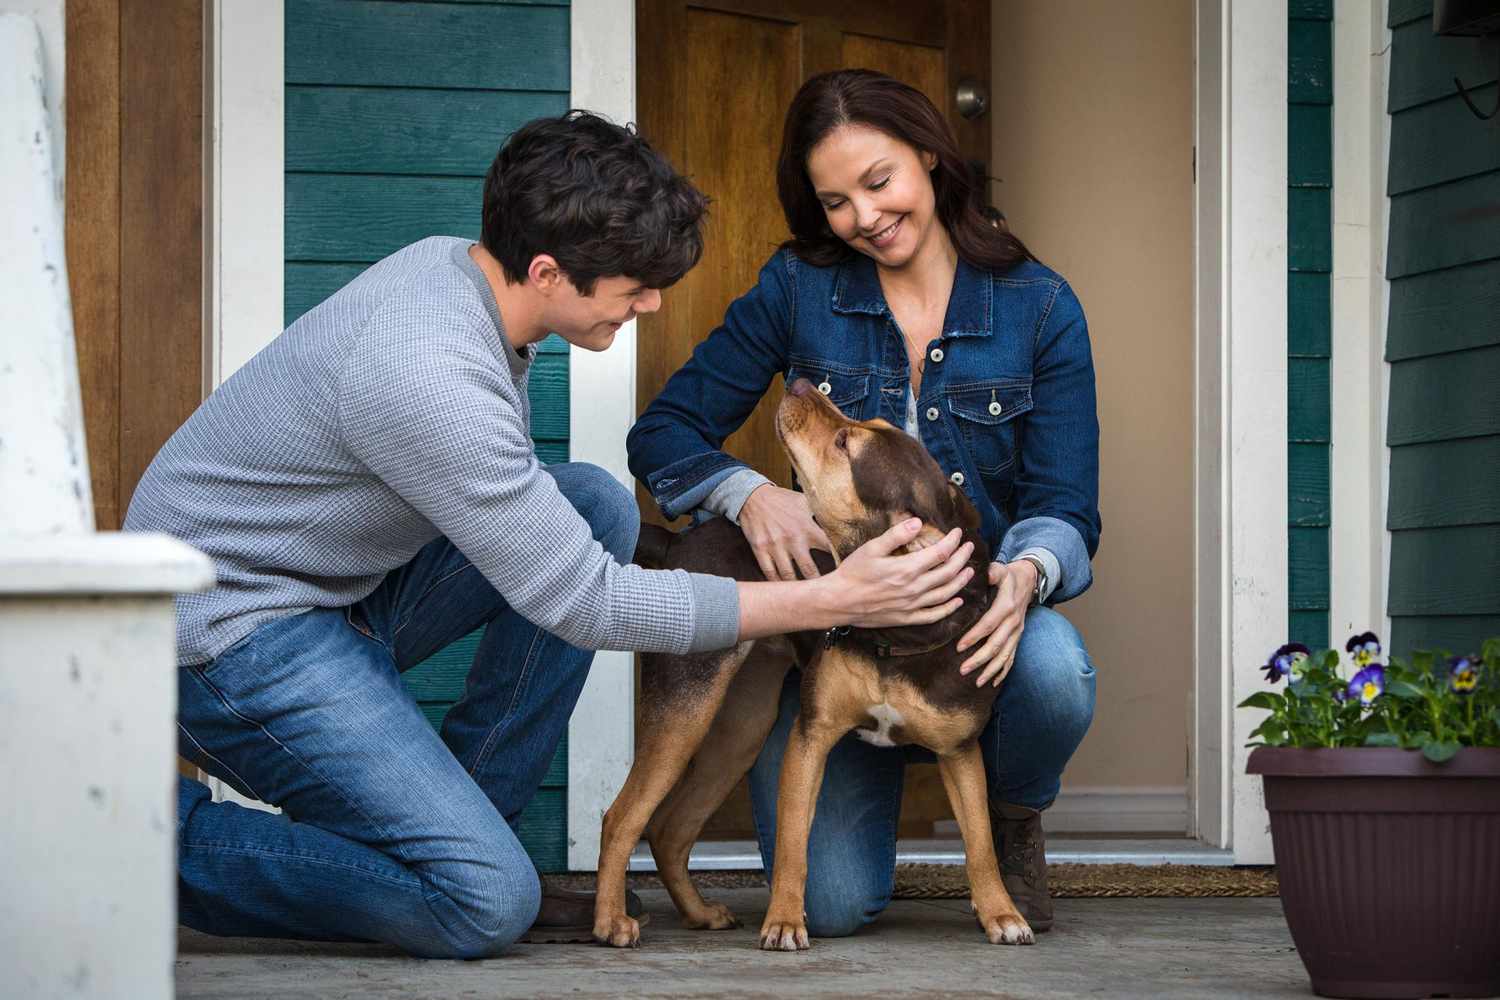 A Dog s Way Home EW review: A Dog's Way Home is just good enough to get you choked up |  EW.com